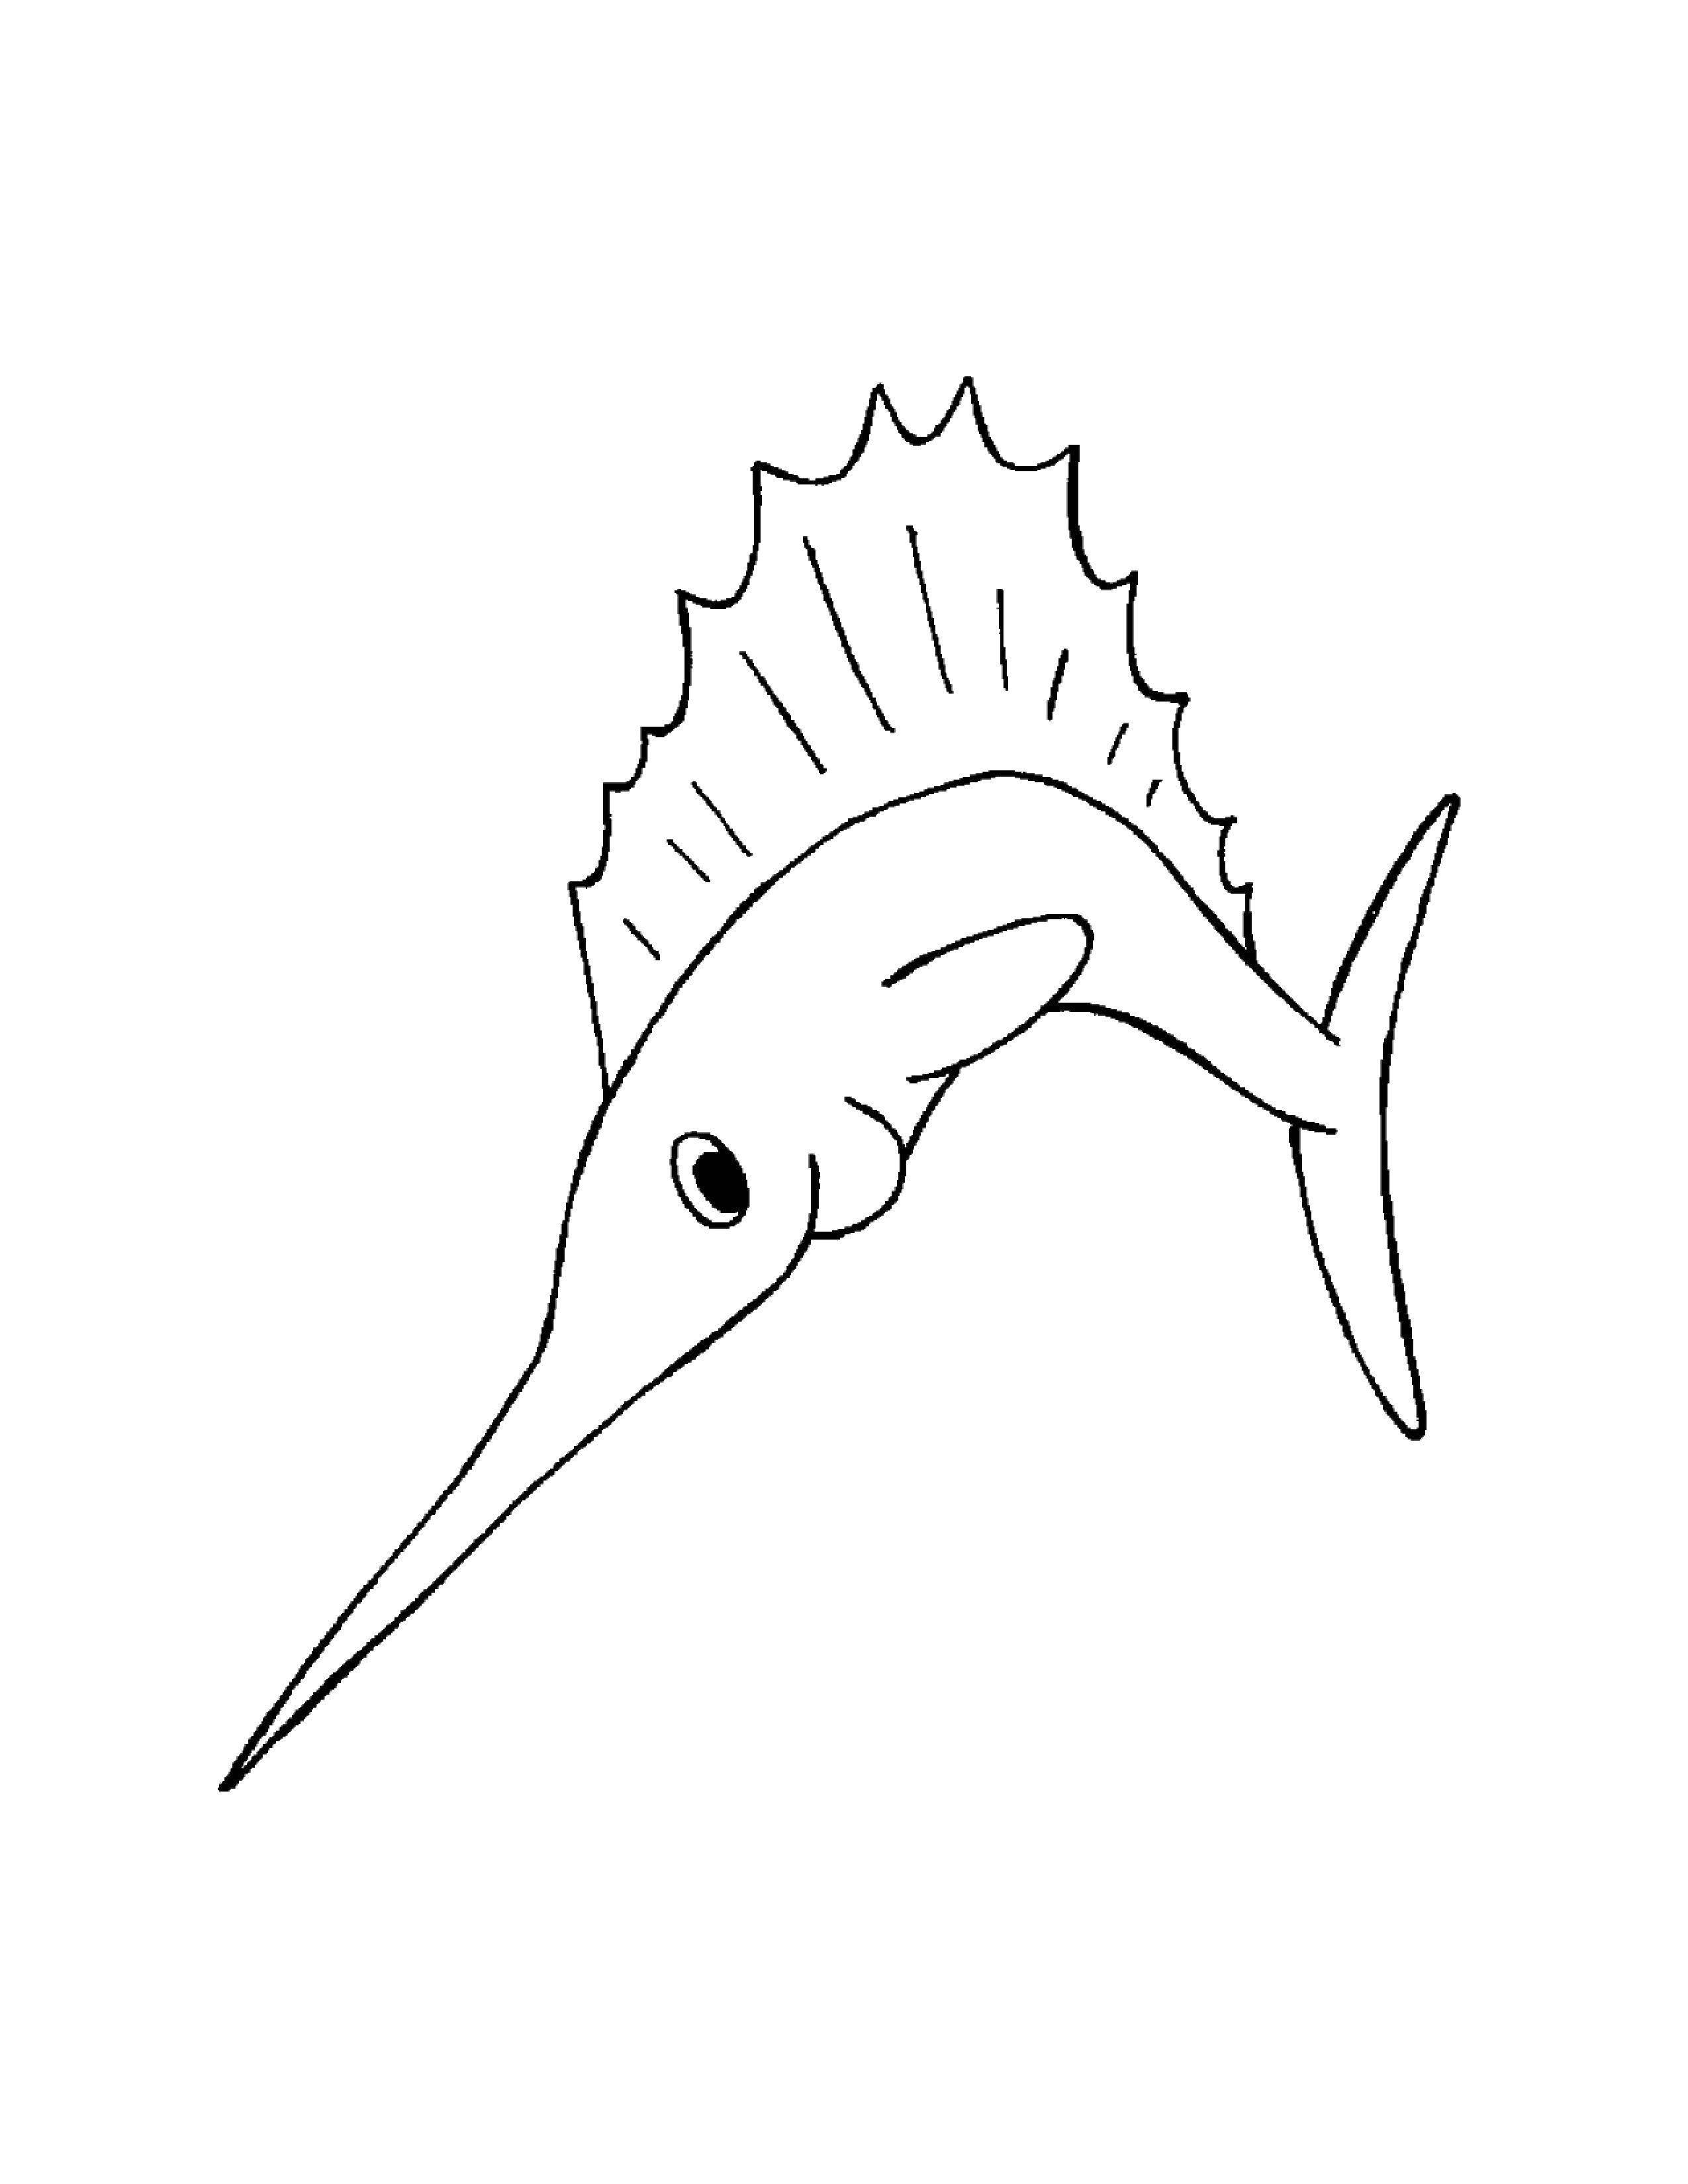 Coloring Swordfish. Category marine. Tags:  Underwater world, fish.